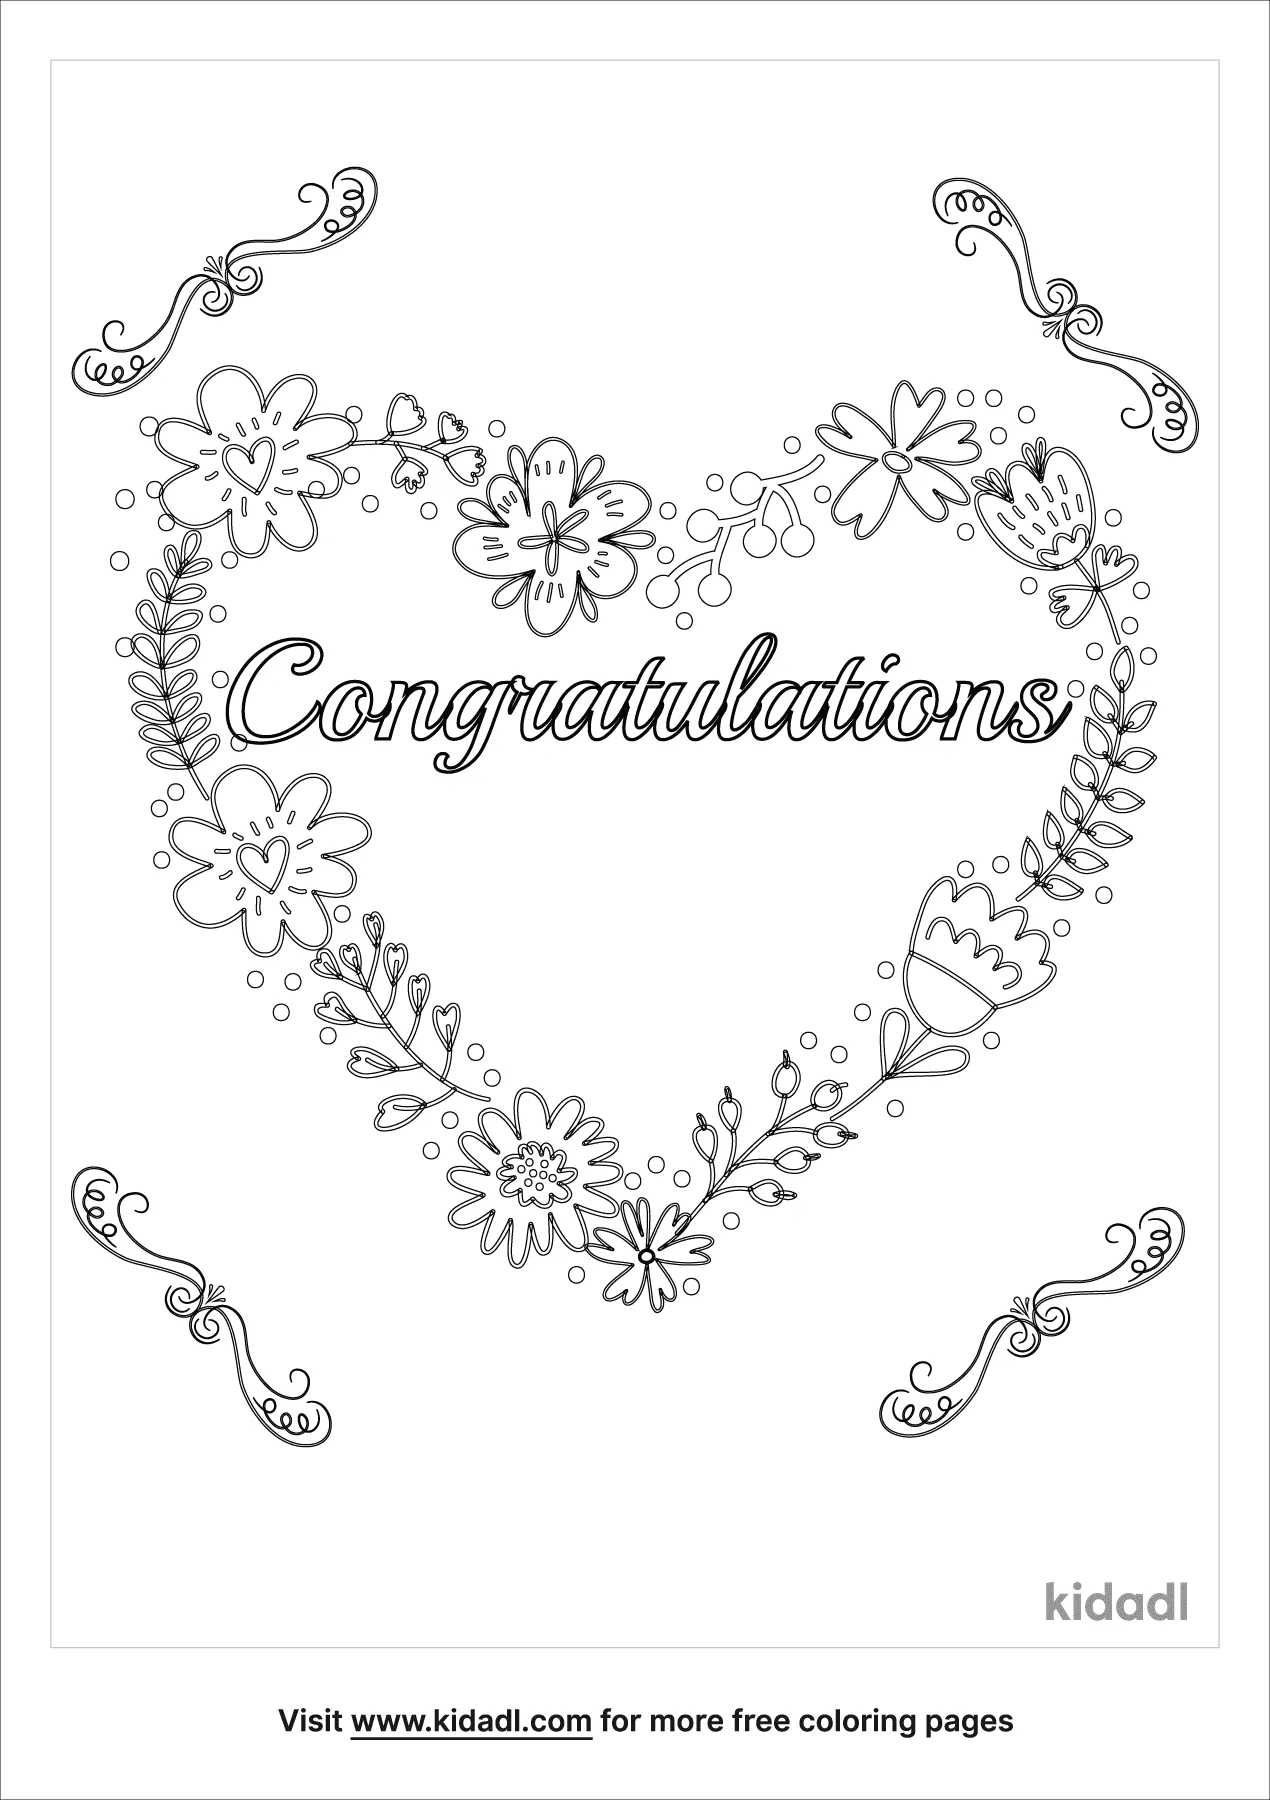 Congratulations On Wedding Card   Kidadl